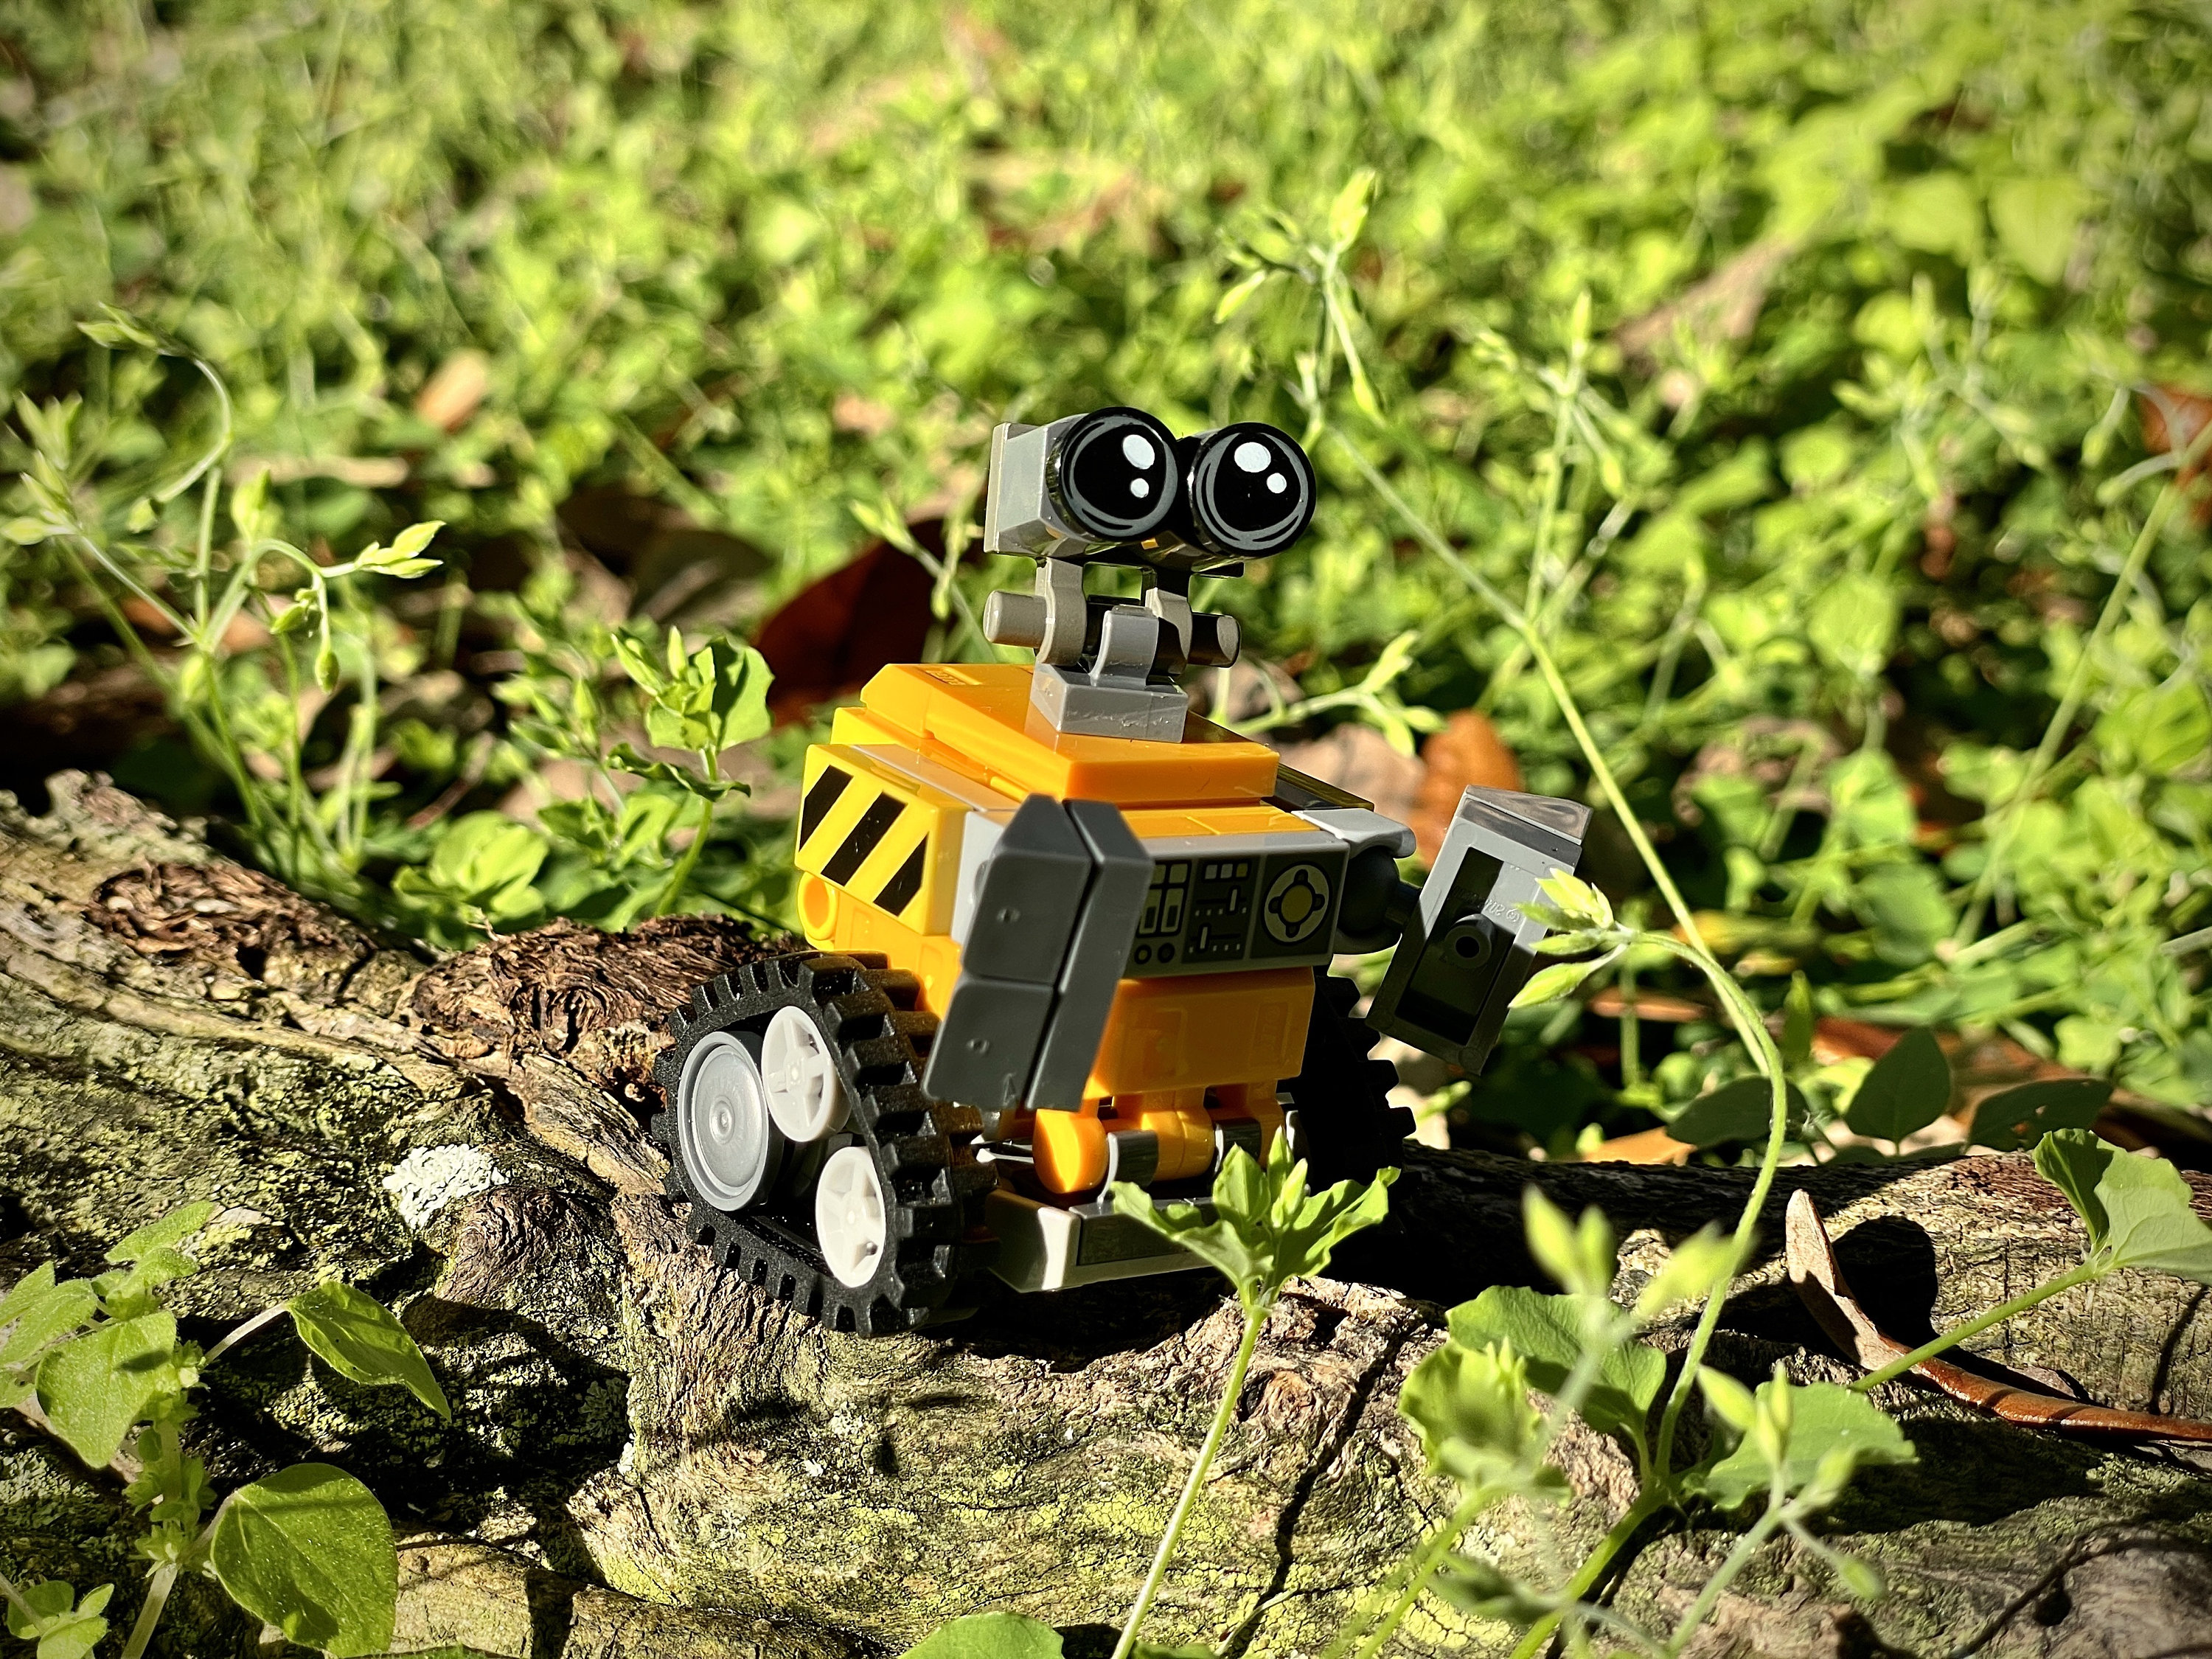 Lego WALL-E and EVE moc : r/Pixar